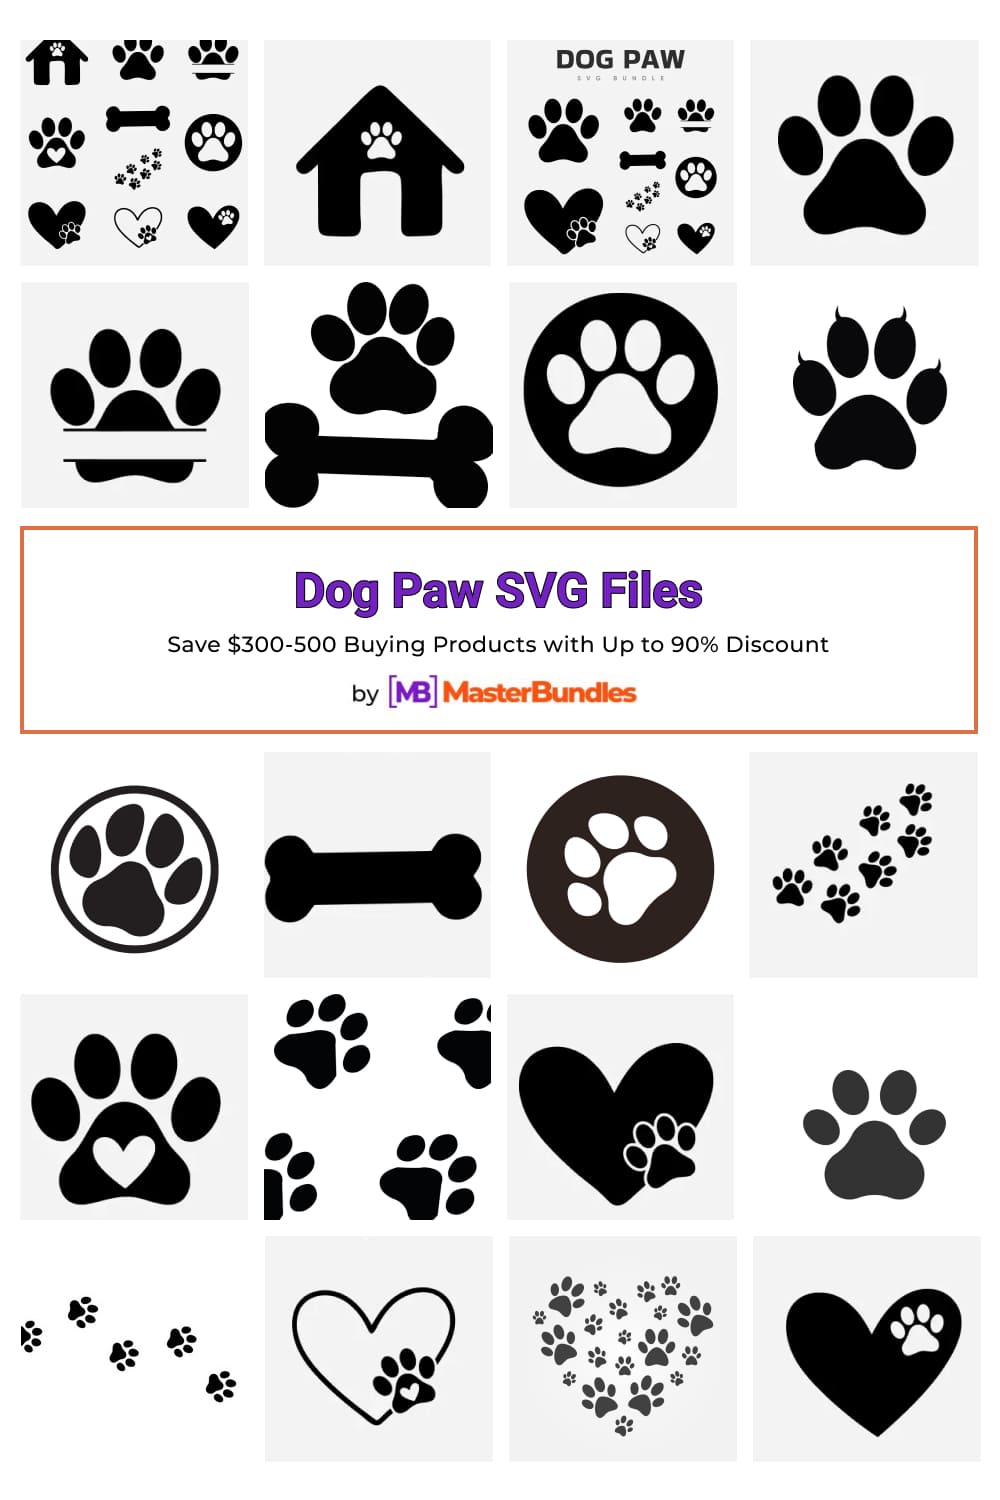 Dog Paw SVG Files for pinterest.